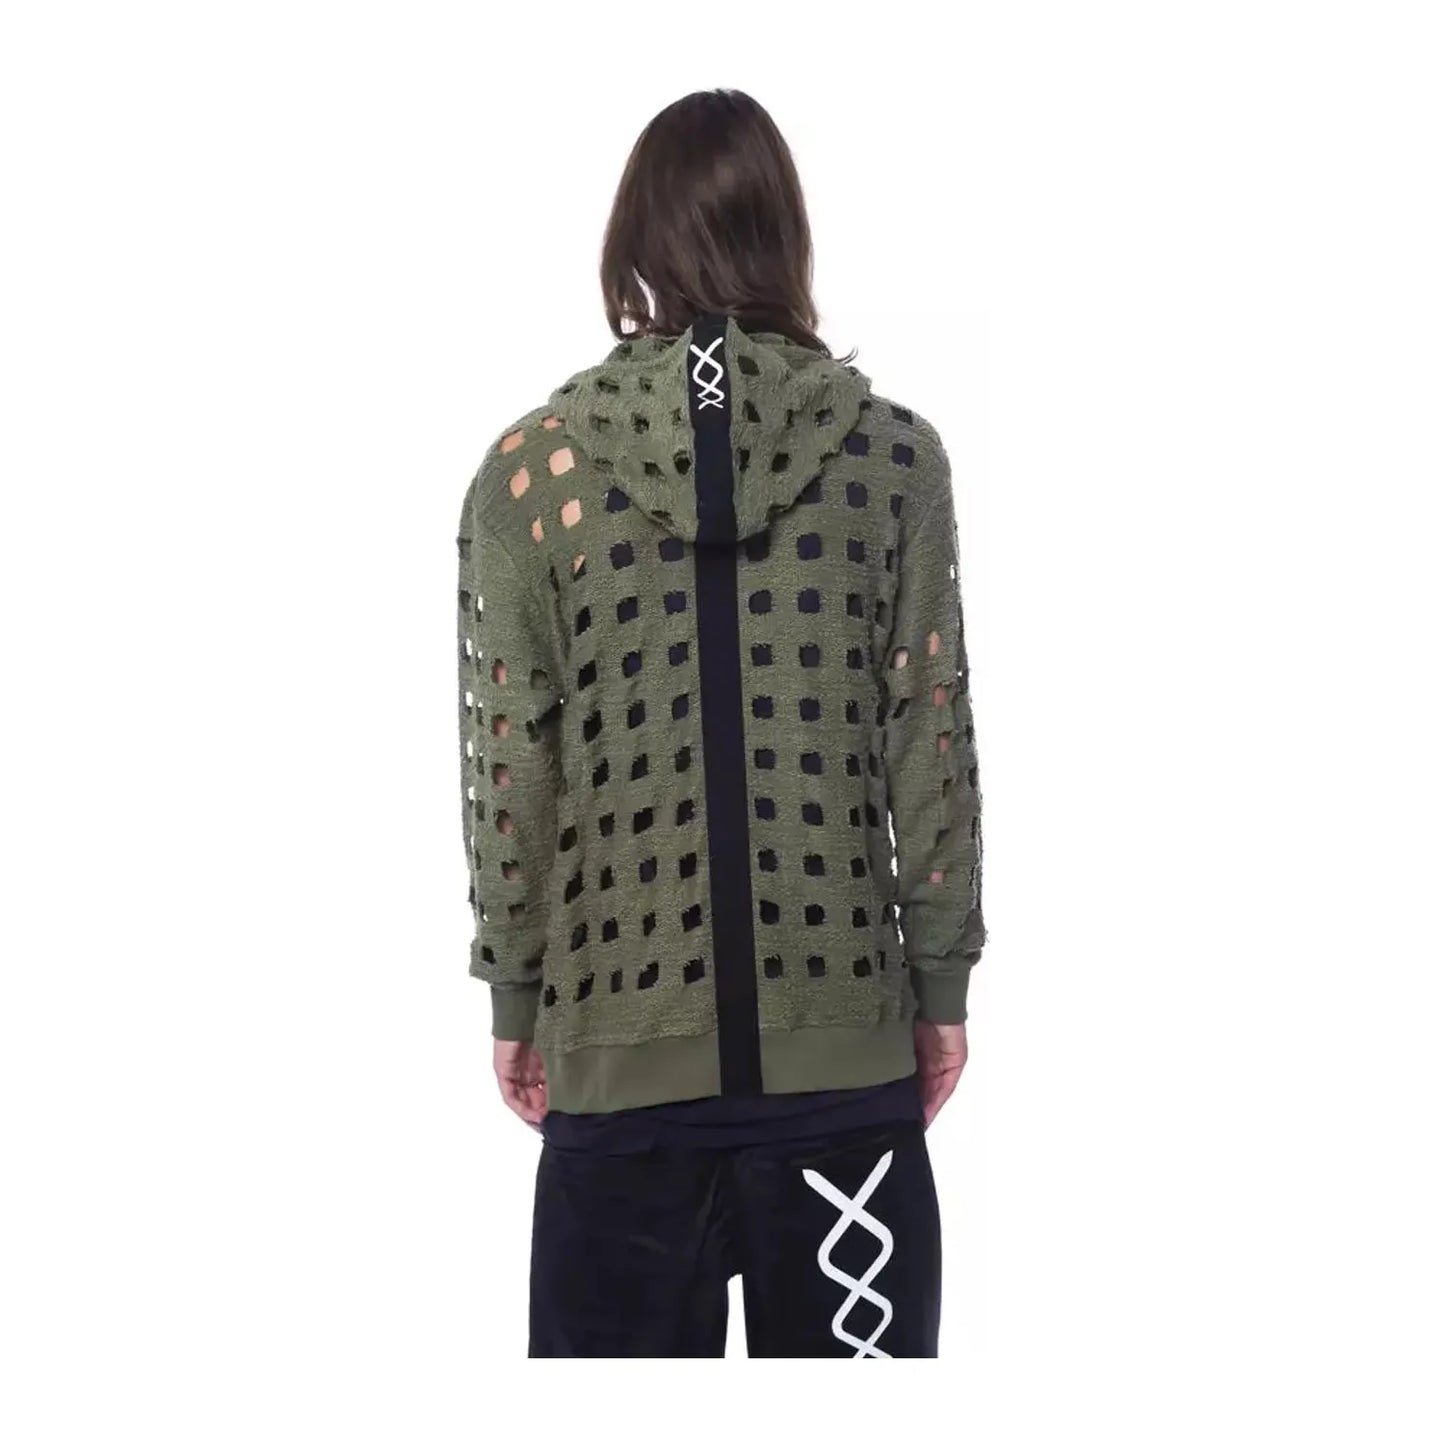 Nicolo Tonetto Oversized Hooded Fleece - Army Zip Comfort army-sweater-1 stock_product_image_12987_1125223793-13-f22f7e86-ee8.webp